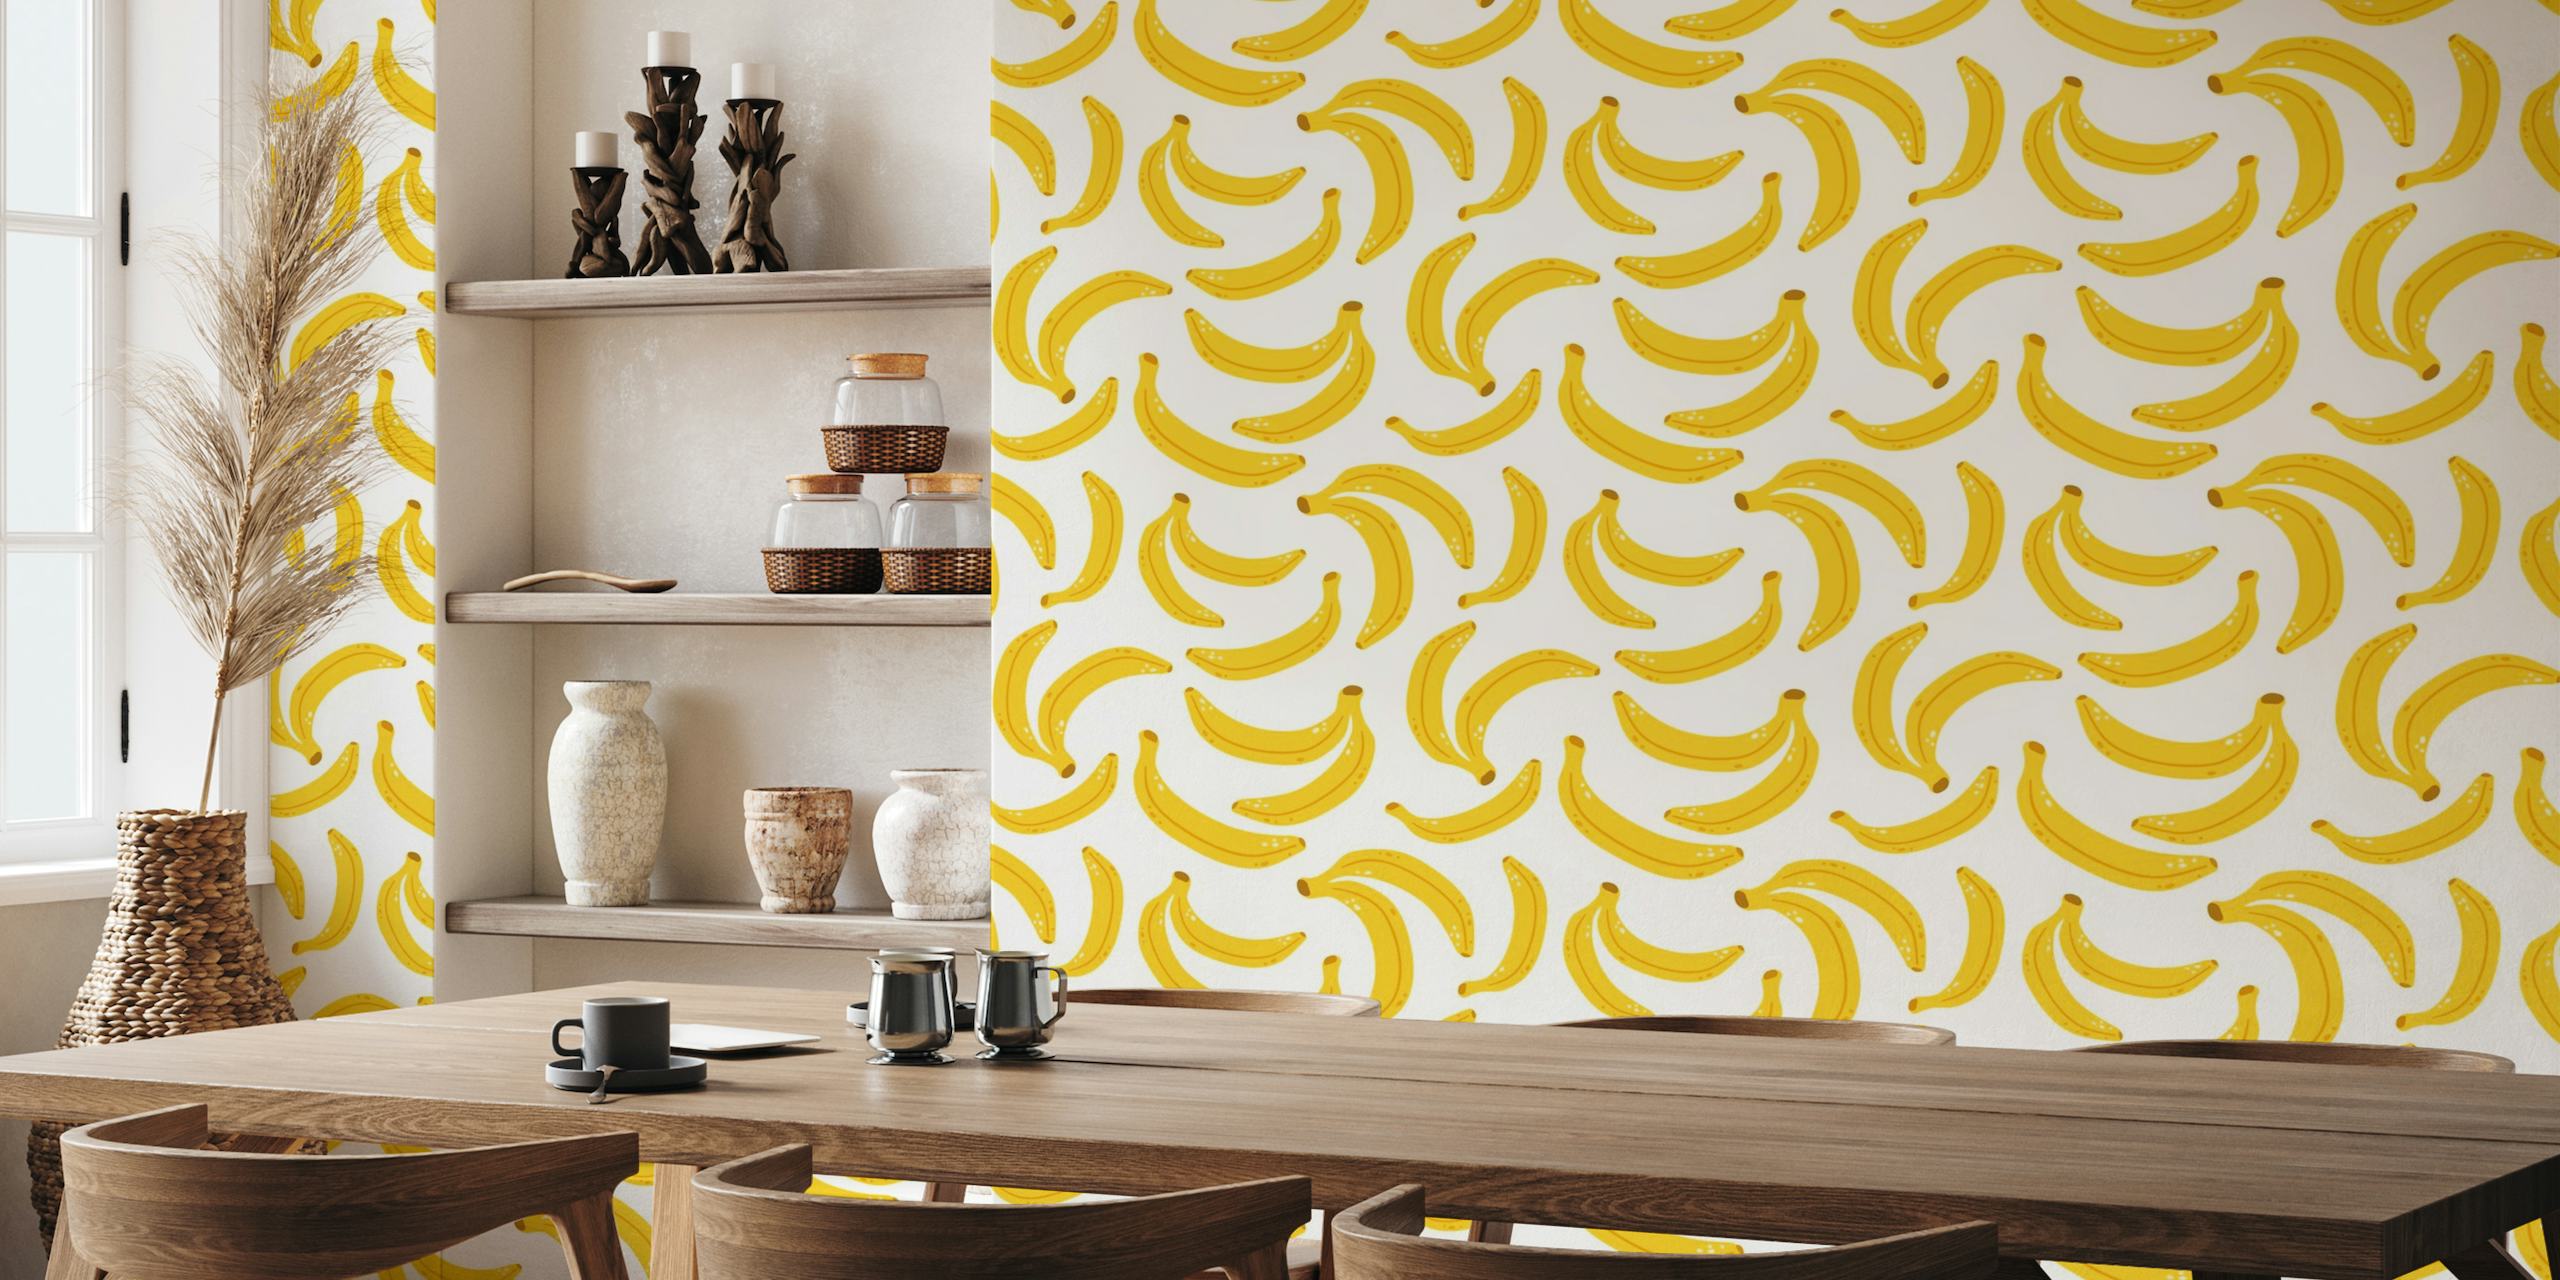 Go bananas wallpaper